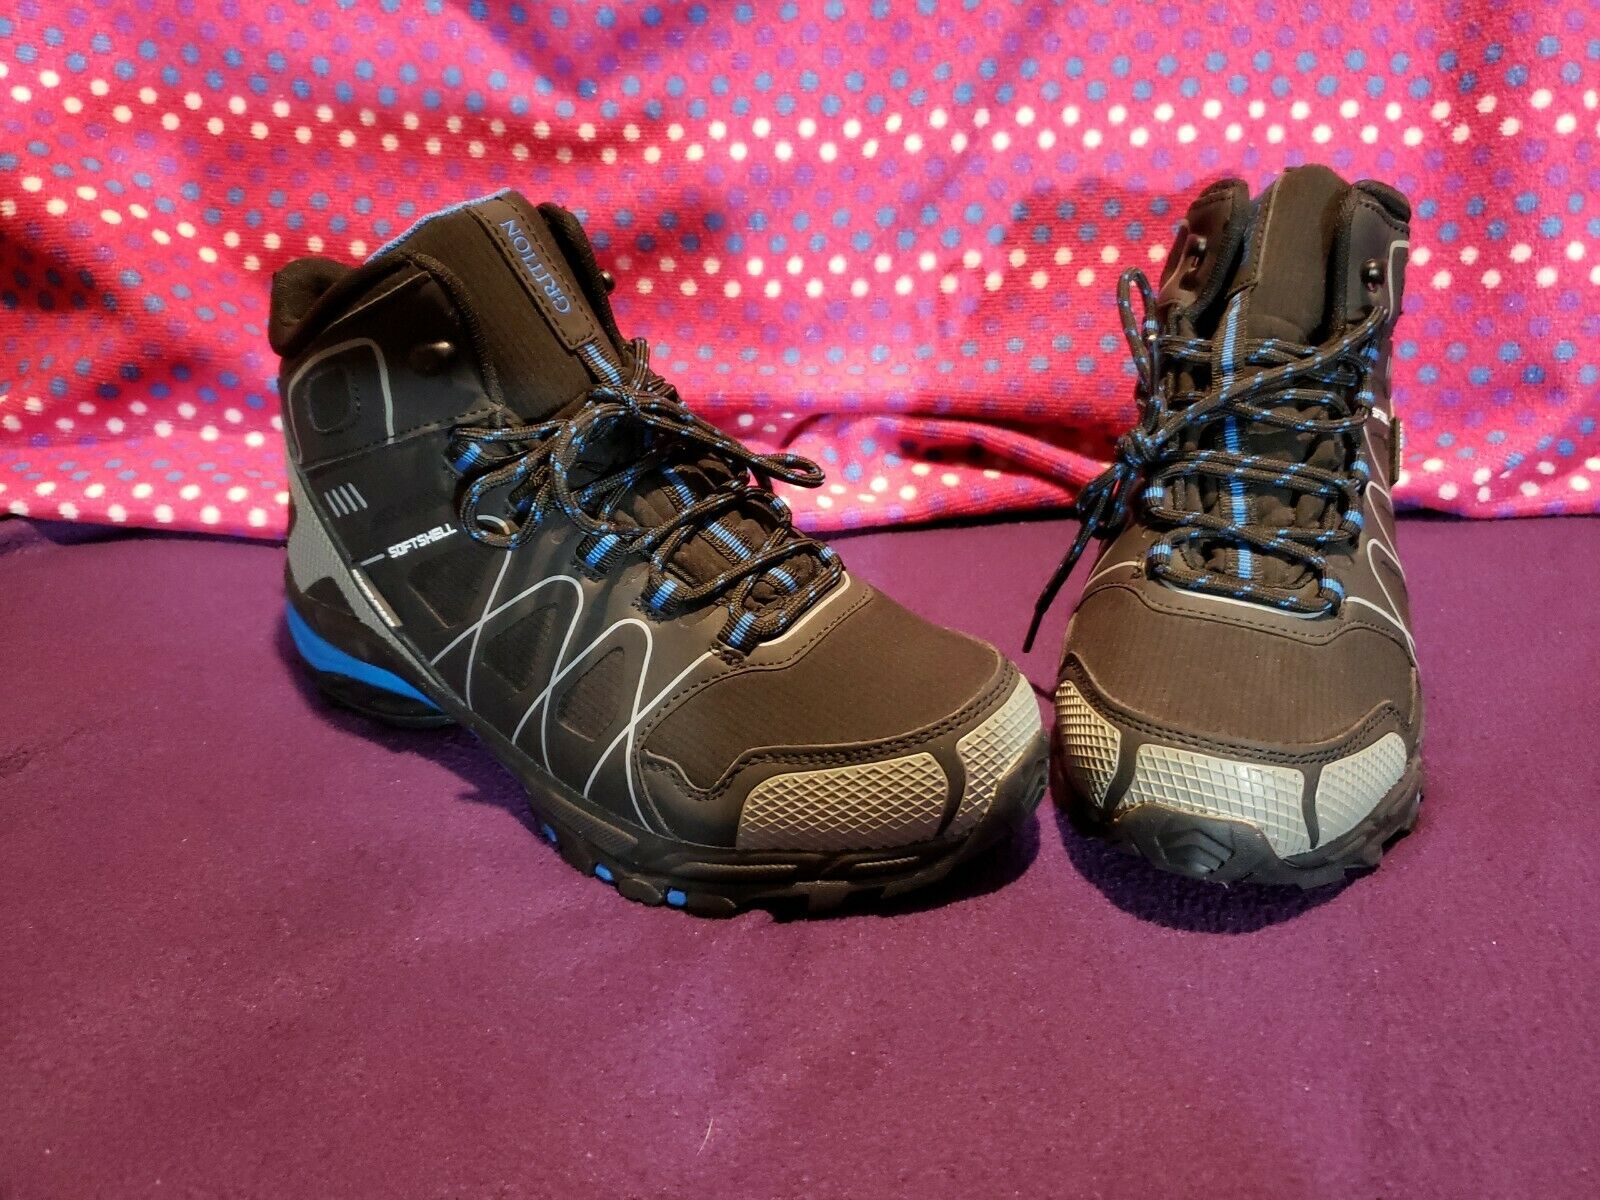 GRITION Mens Hiking Work Boots Waterproof Ankle Boots, Lightweight Trekking Shoe